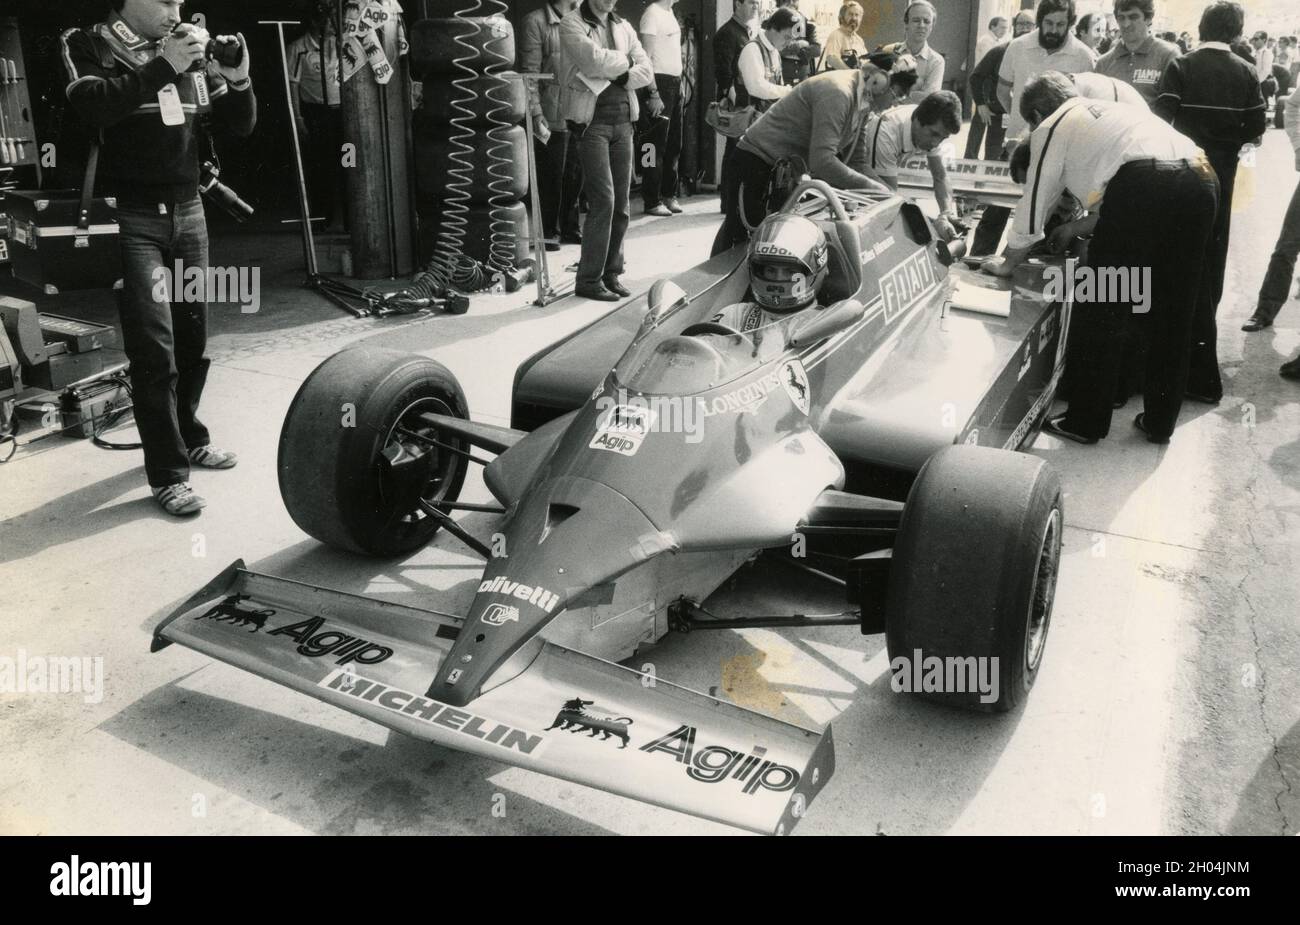 Canadian racing driver Gilles Villeneuve, 1980s Stock Photo